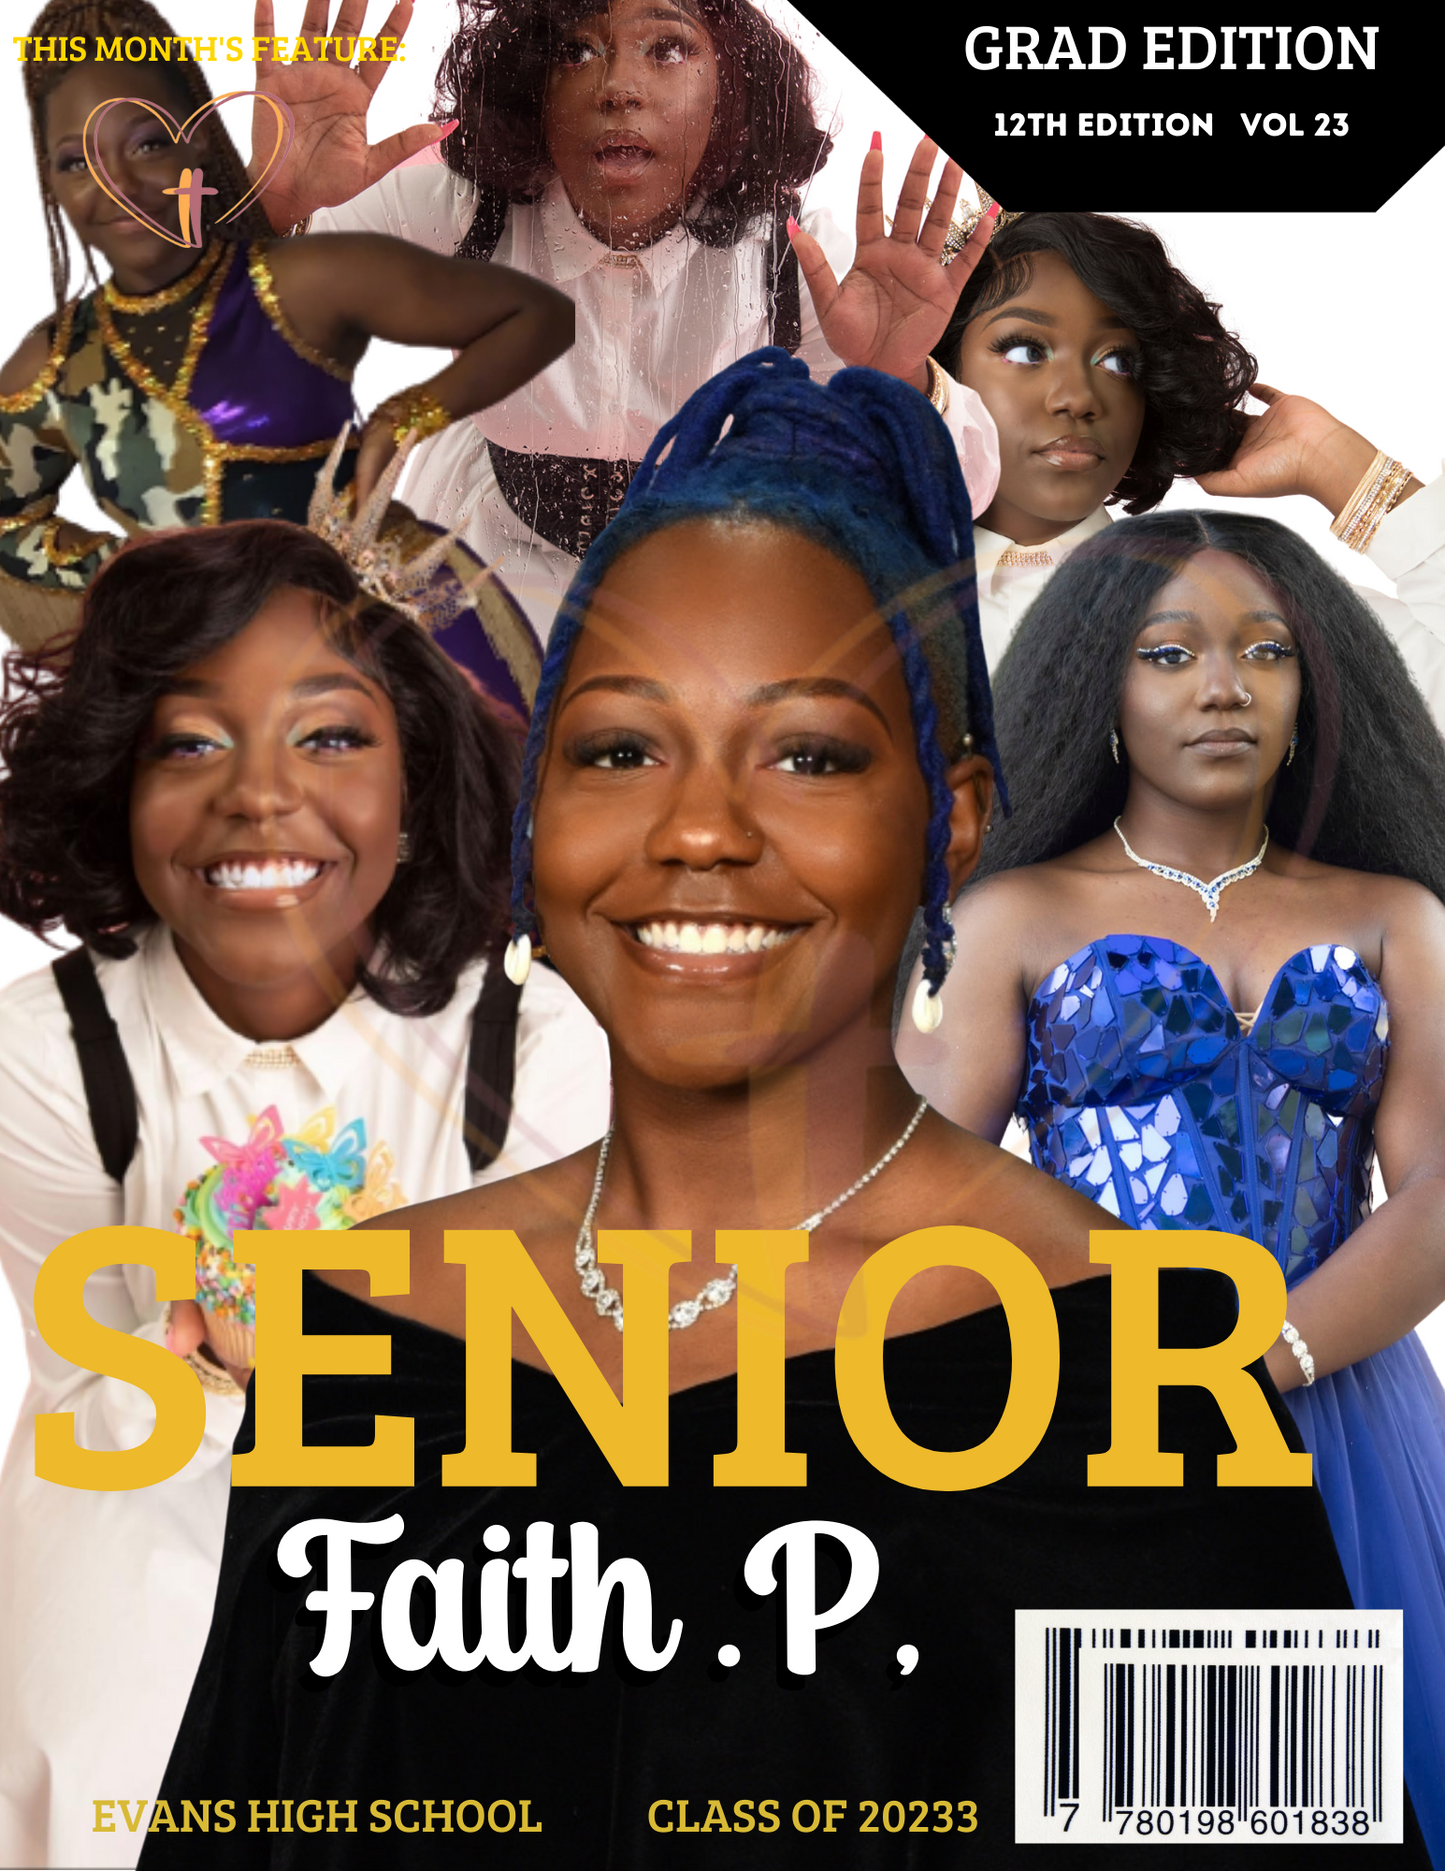 Senior Magazine Cover